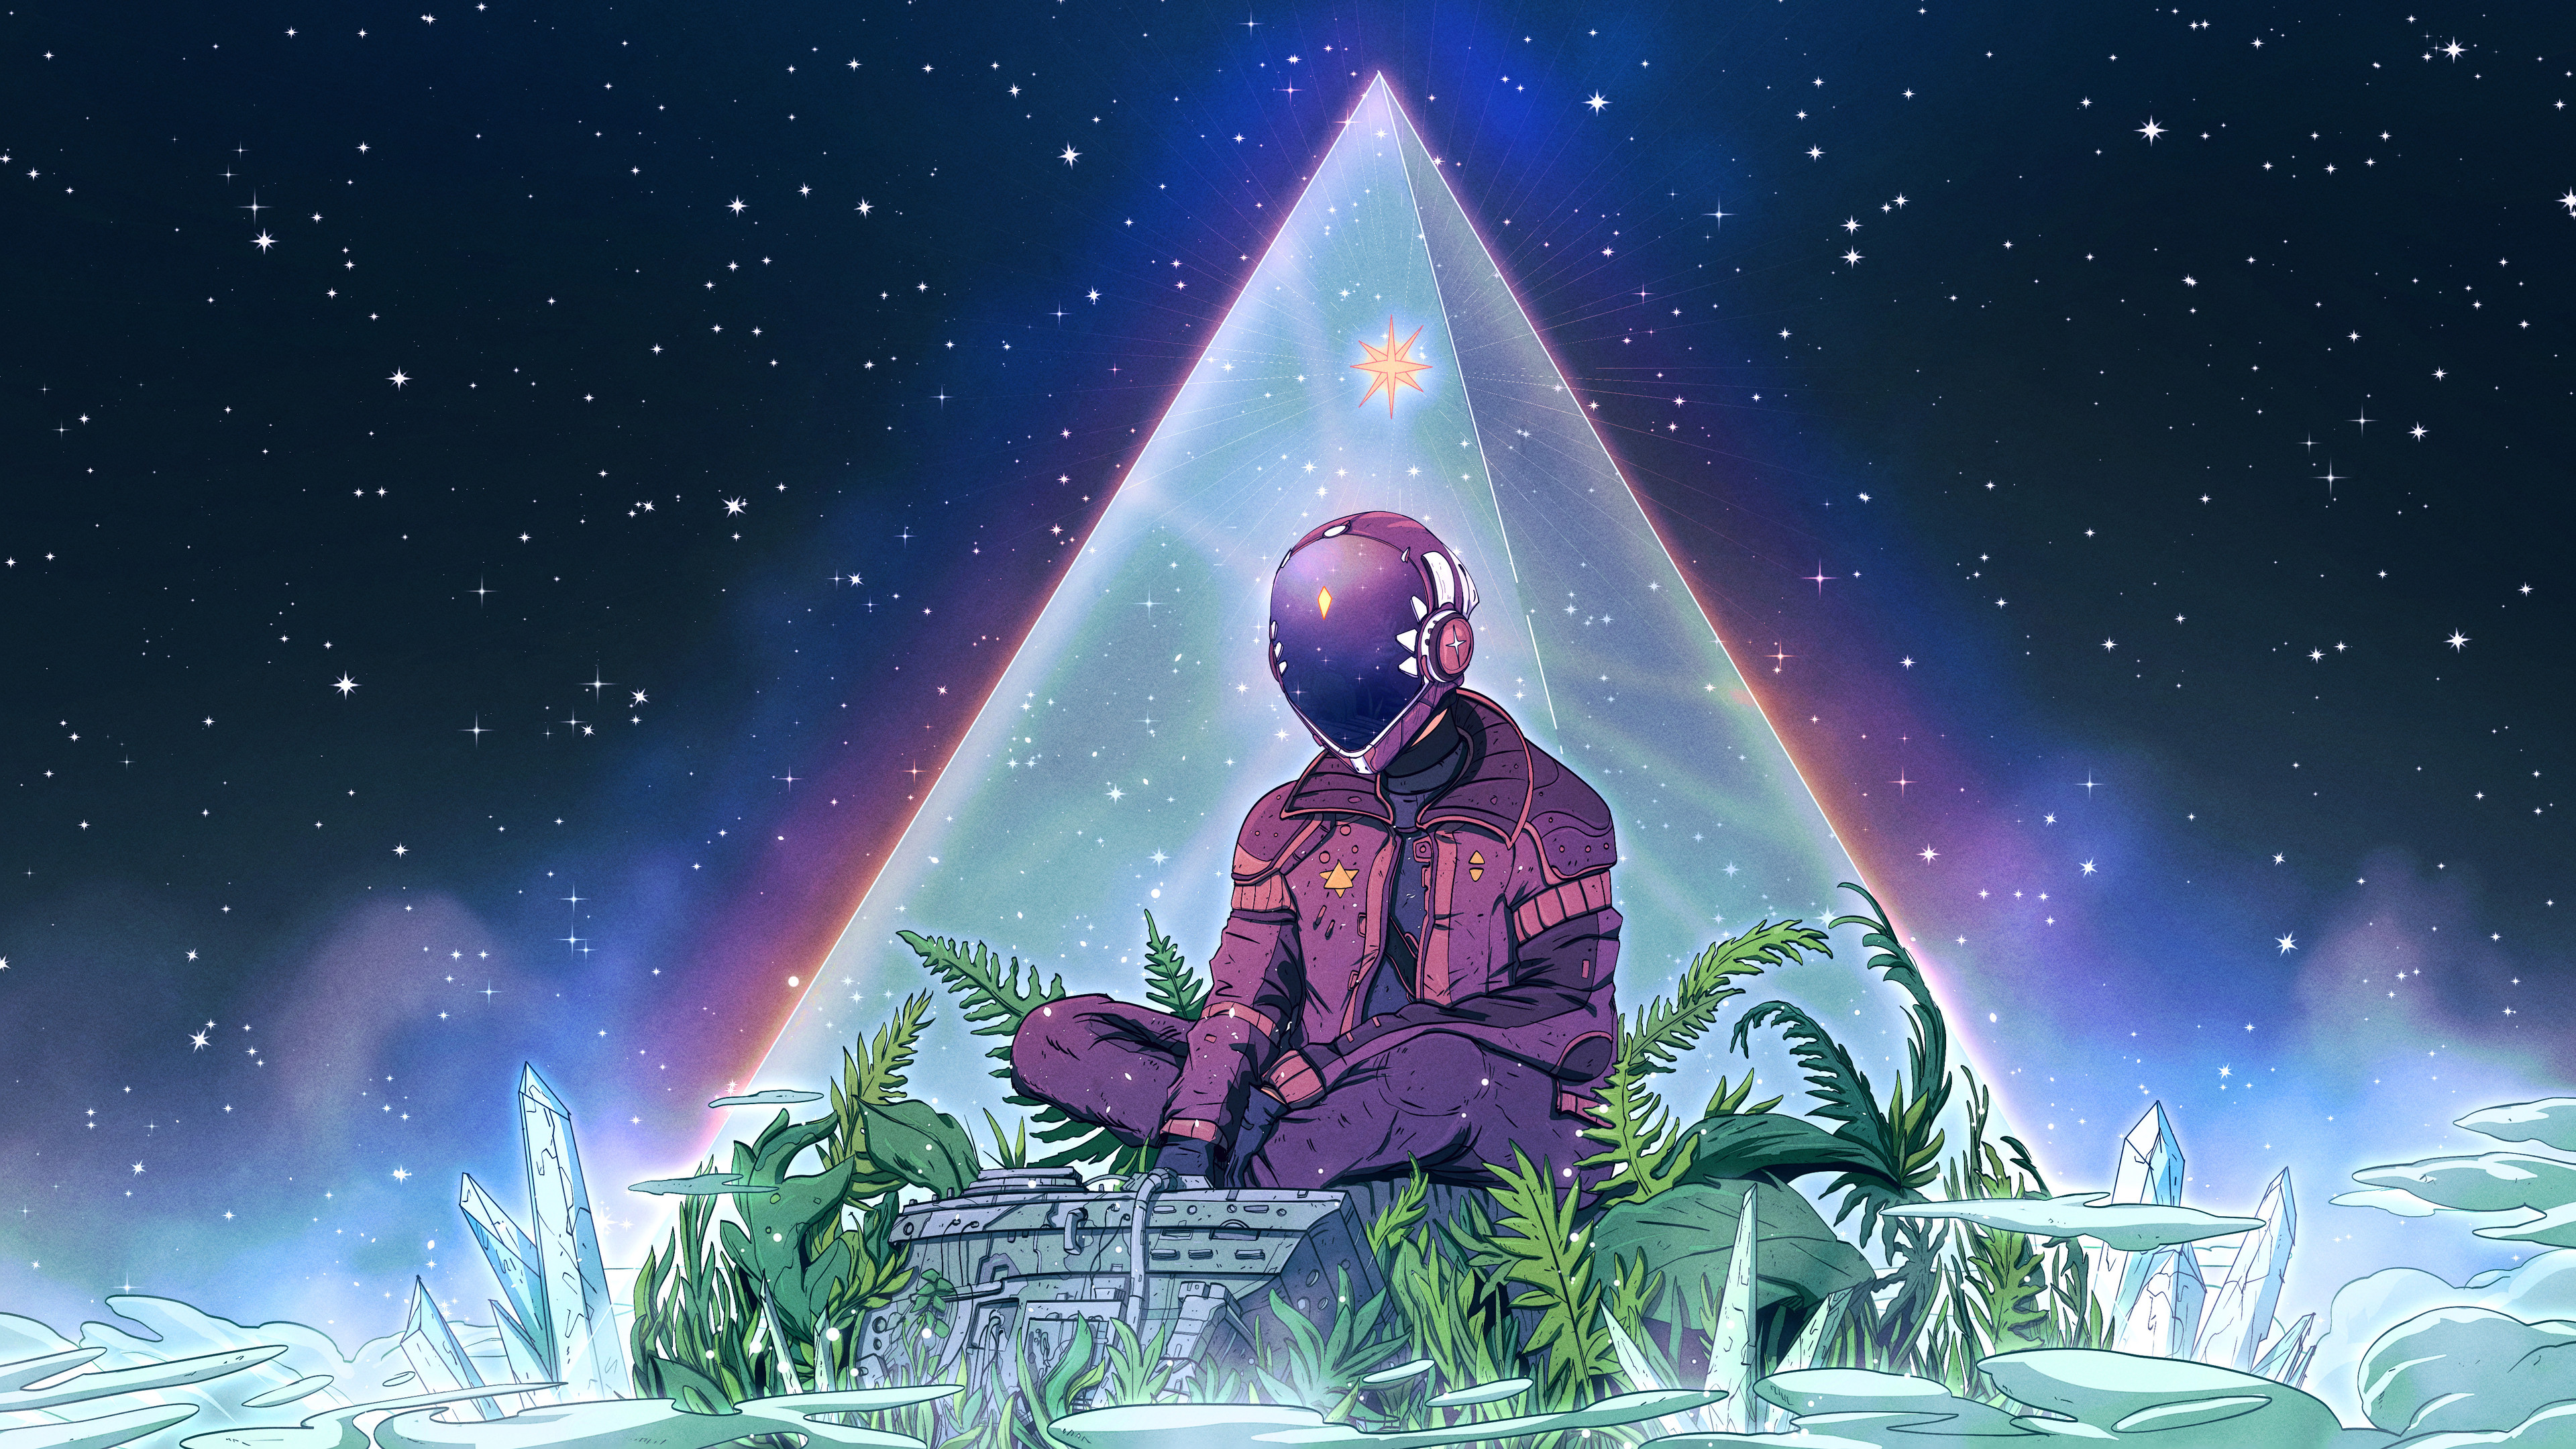 General 3840x2160 Christian Benavides digital art fantasy art pyramid Daft Punk cyberpunk starry night artwork